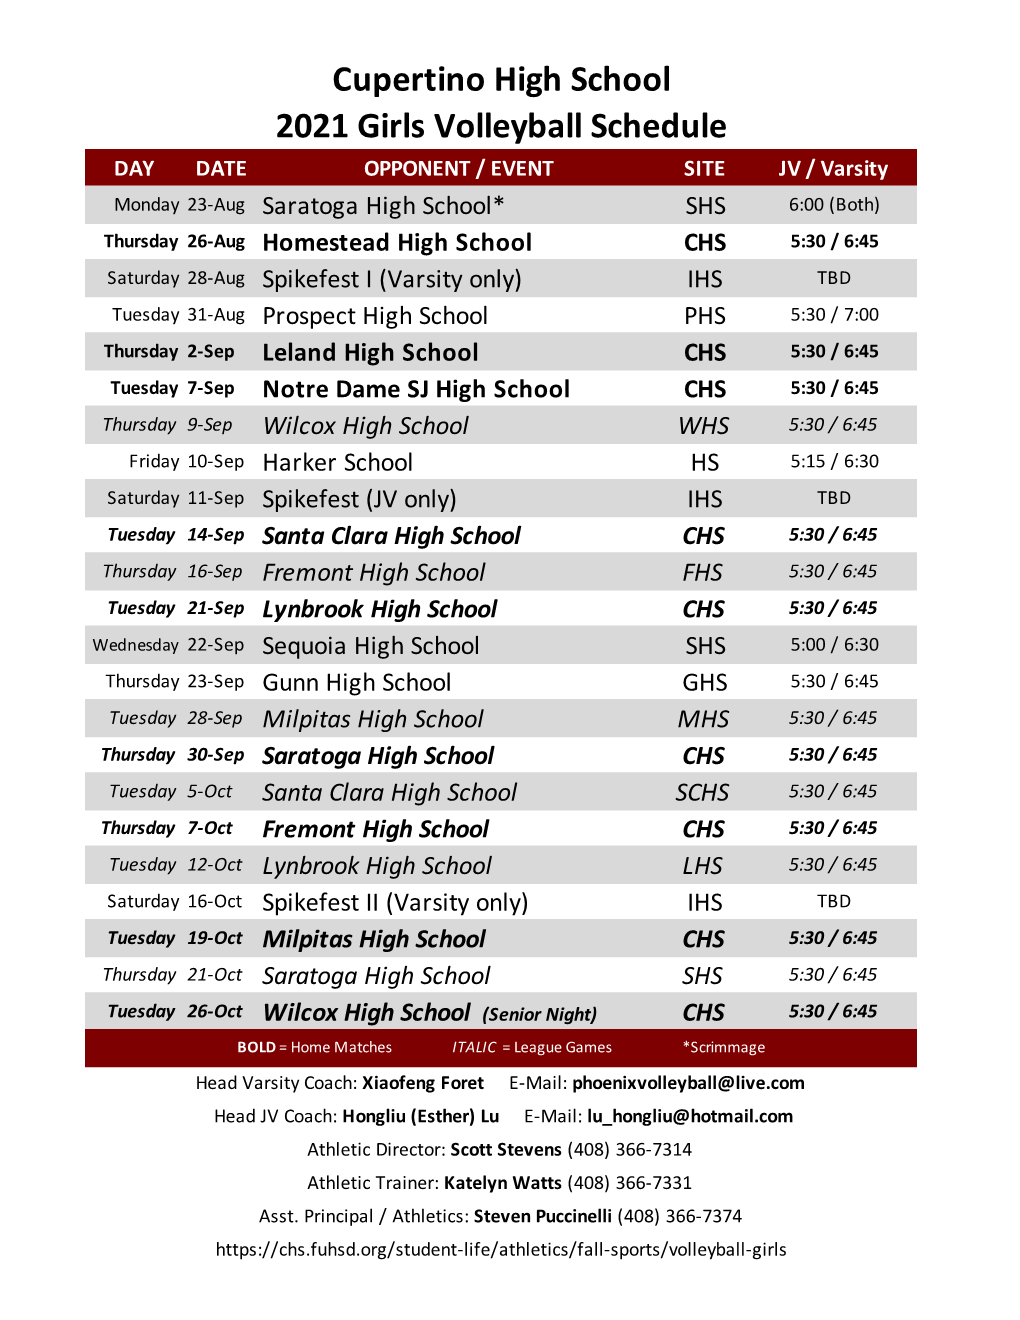 Cupertino High School 2021 Girls Volleyball Schedule